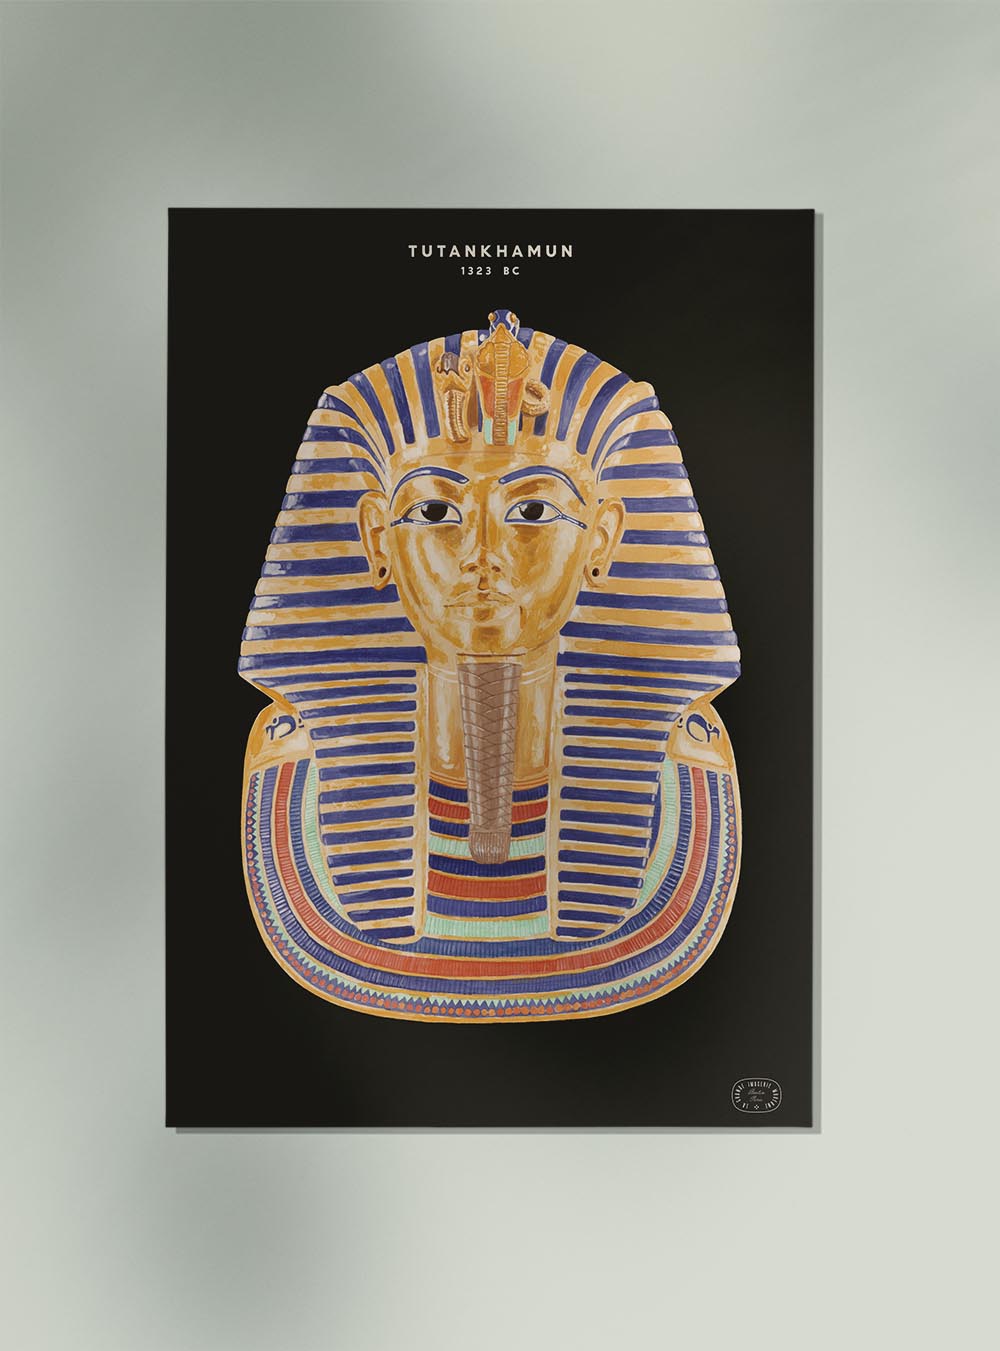 Tutankhamun Mask by Florent Bodart